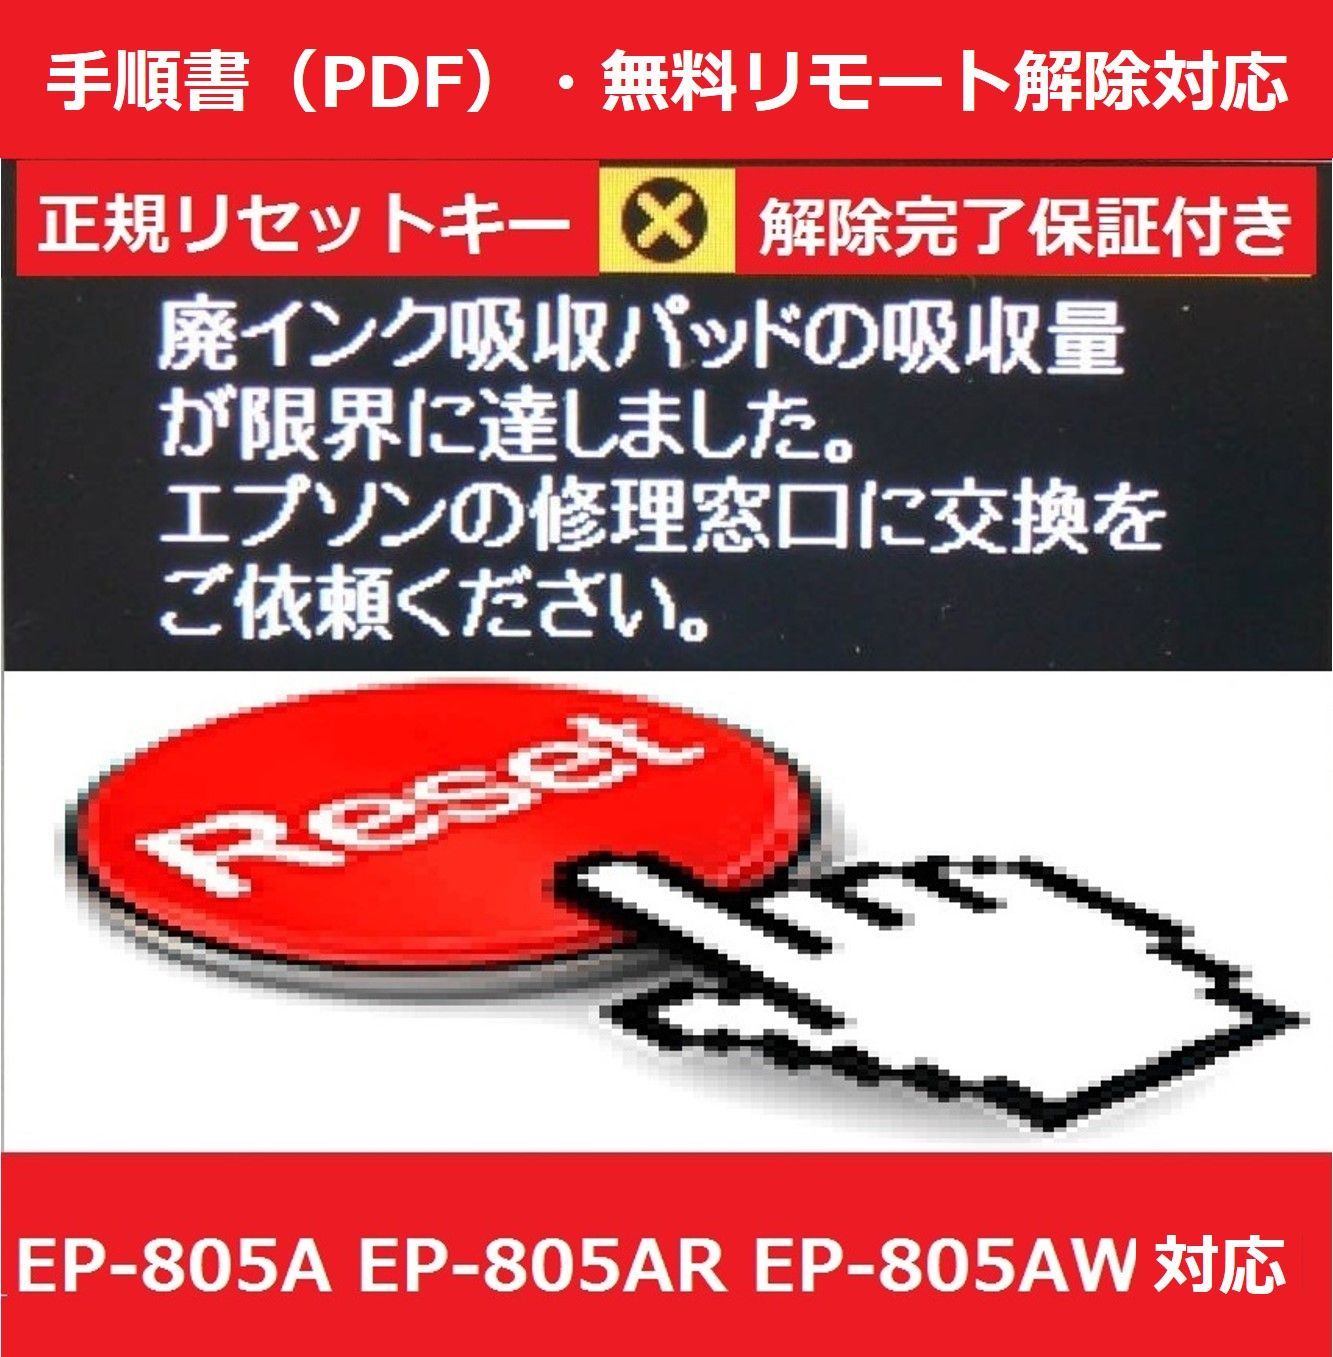 EP-805A EP-805AR EP-805AW EPSON/エプソン ♪安心の日本製吸収材 